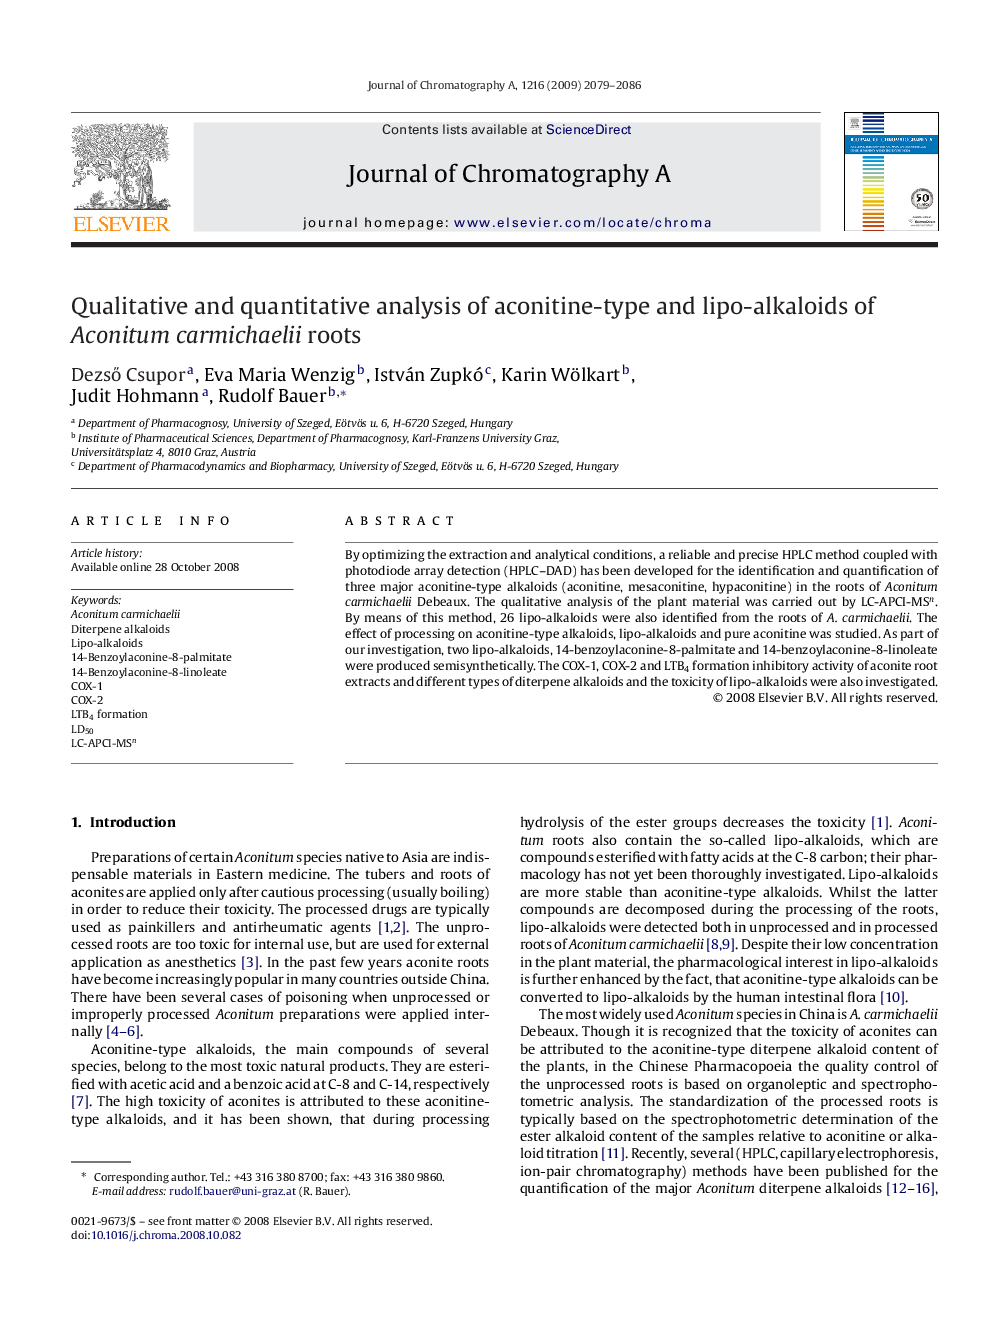 Qualitative and quantitative analysis of aconitine-type and lipo-alkaloids of Aconitum carmichaelii roots